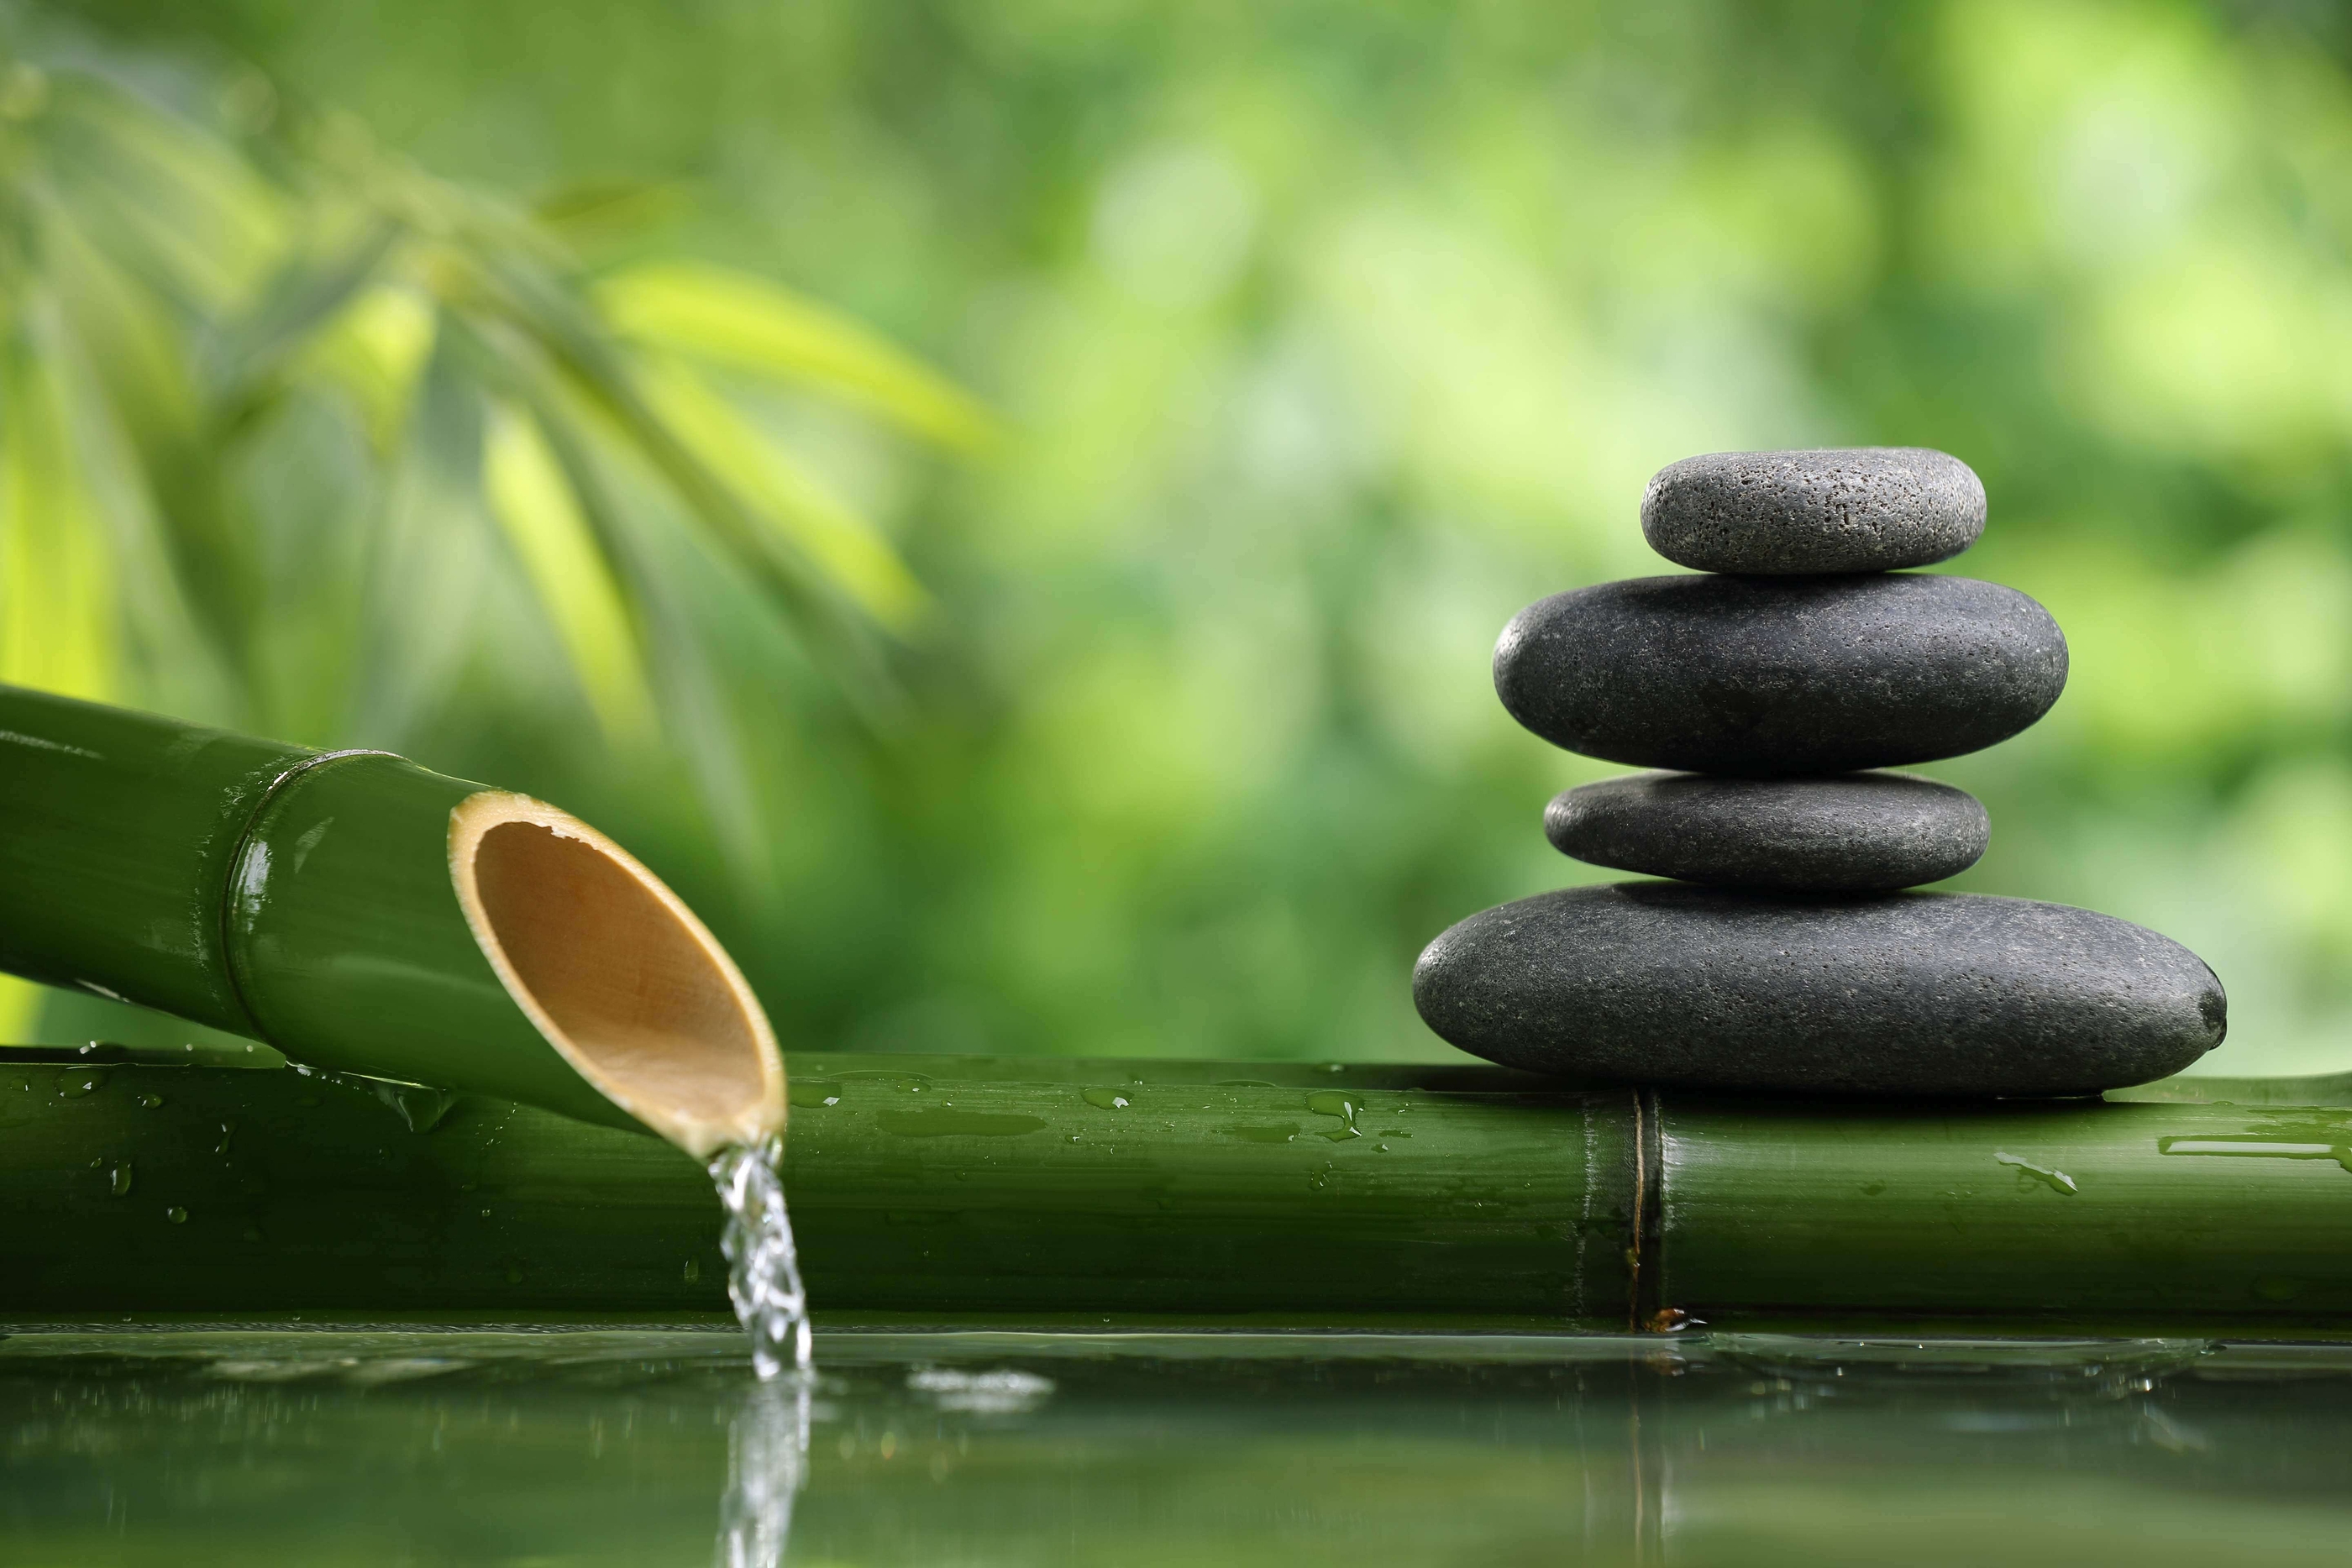  zen como fondos de pantalla Images for relaxing zen like wallpapers